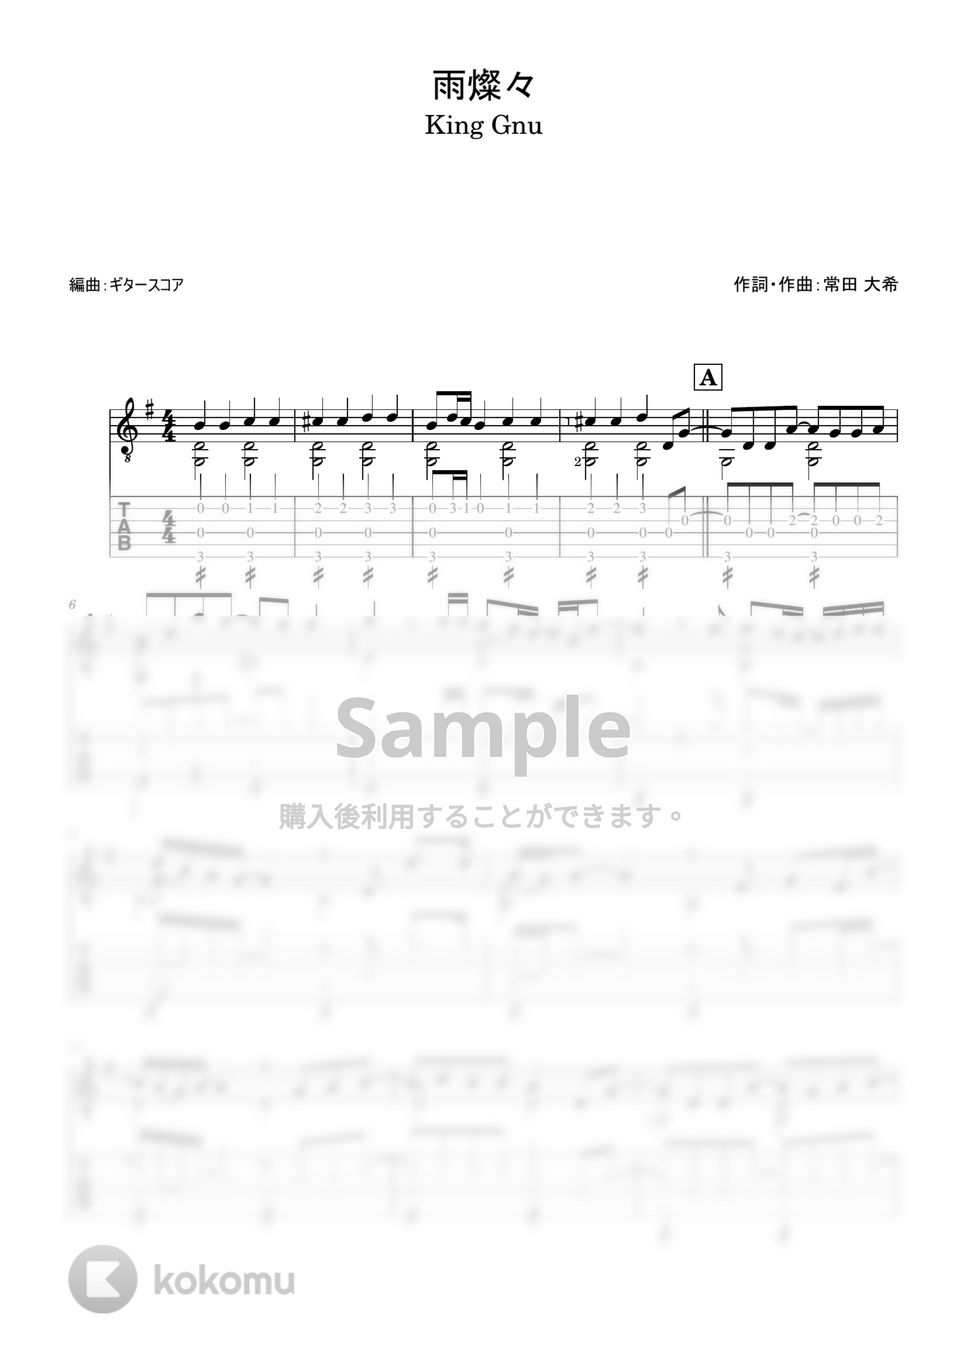 King Gnu - 雨燦々 (ギター・ソロ用) by ギタースコア